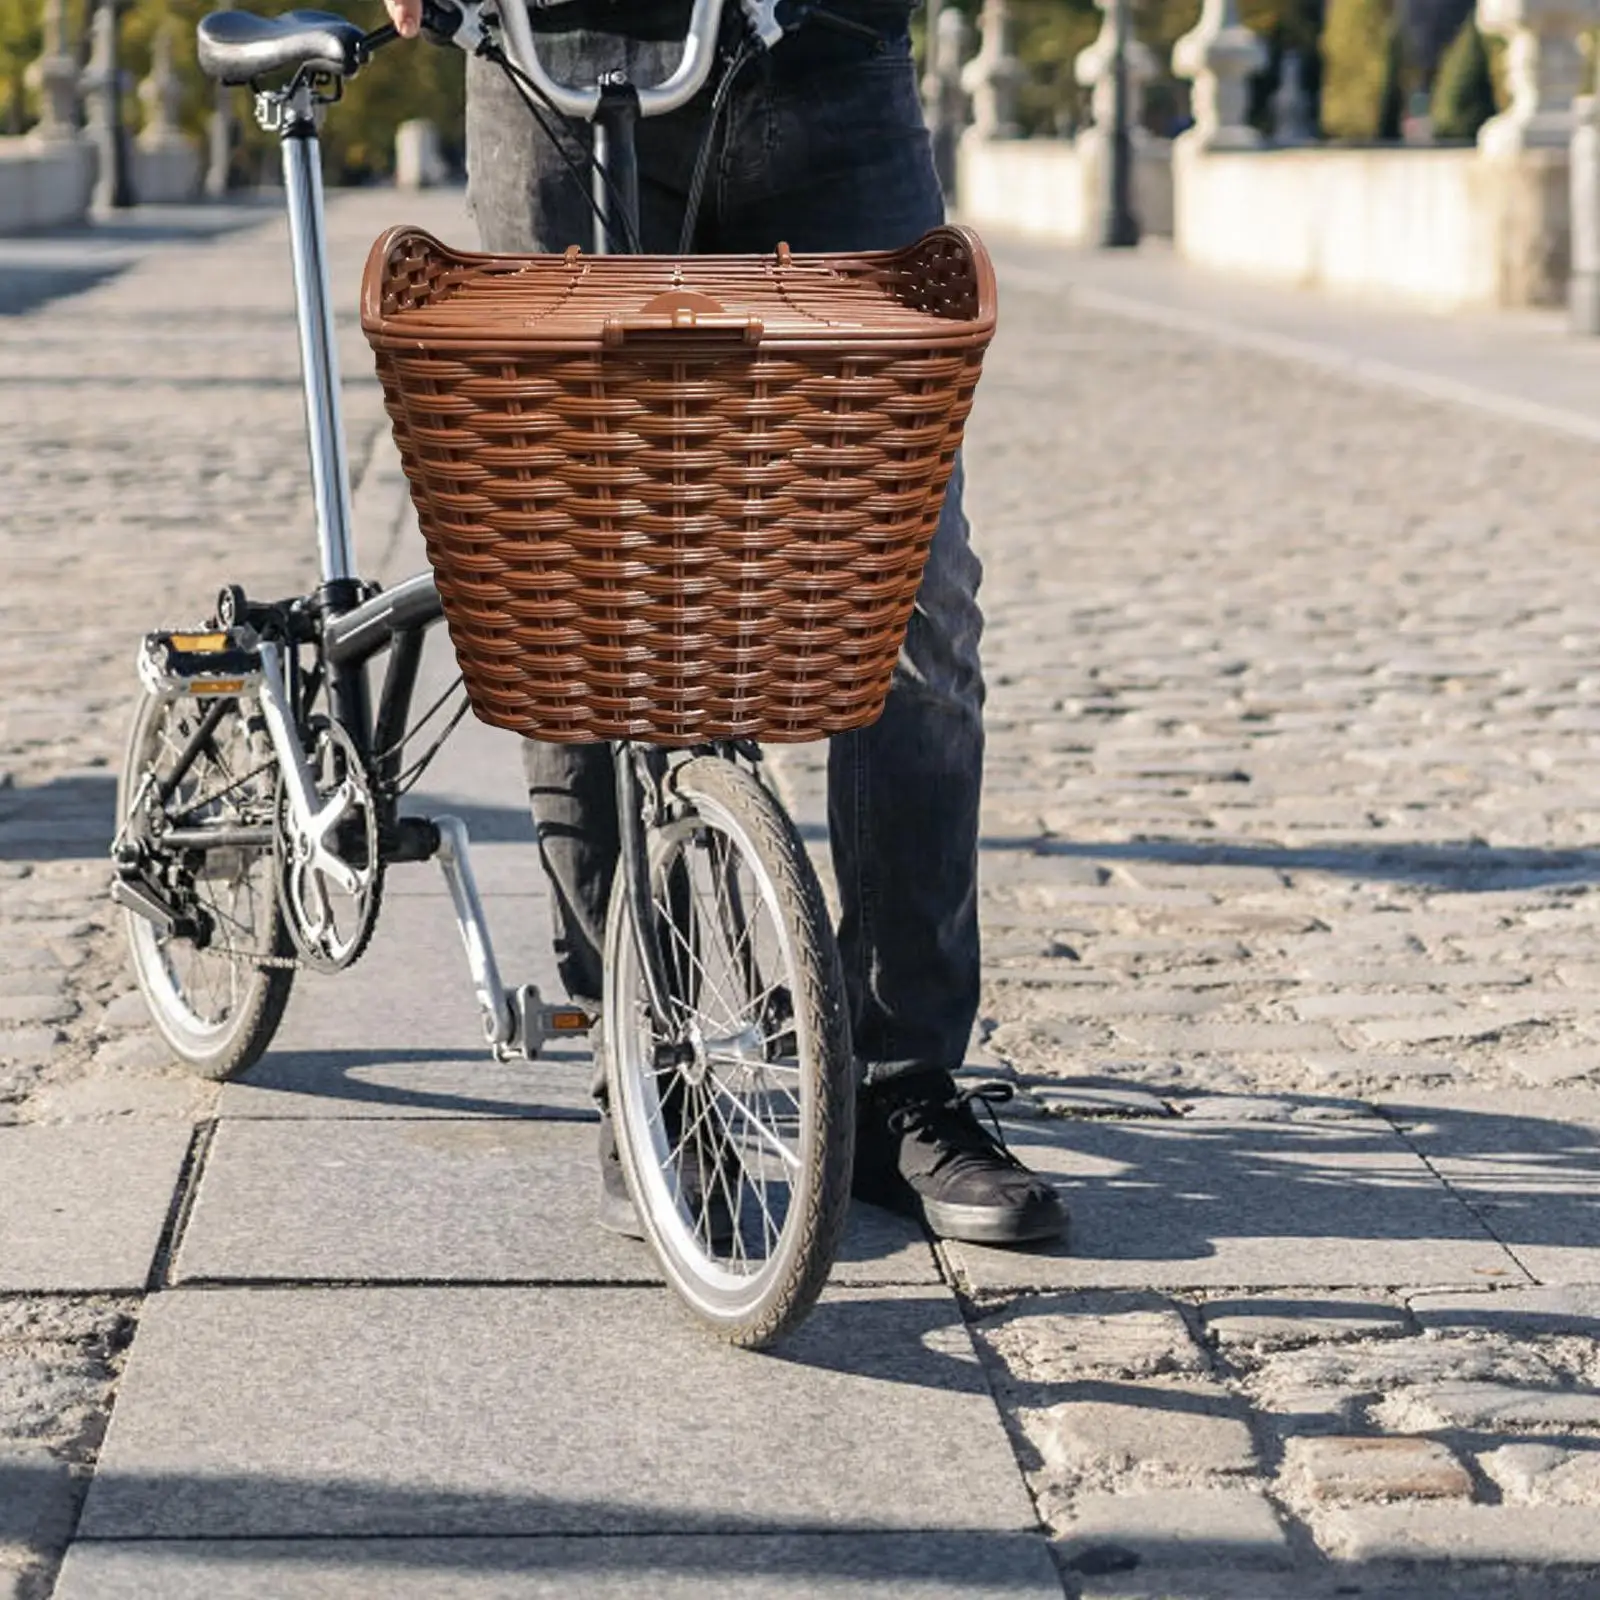 Bike Basket with Lid Detachable Durable Retro Style Electric Vehicle Basket Bicycle Handlebar Storage Basket Accessories